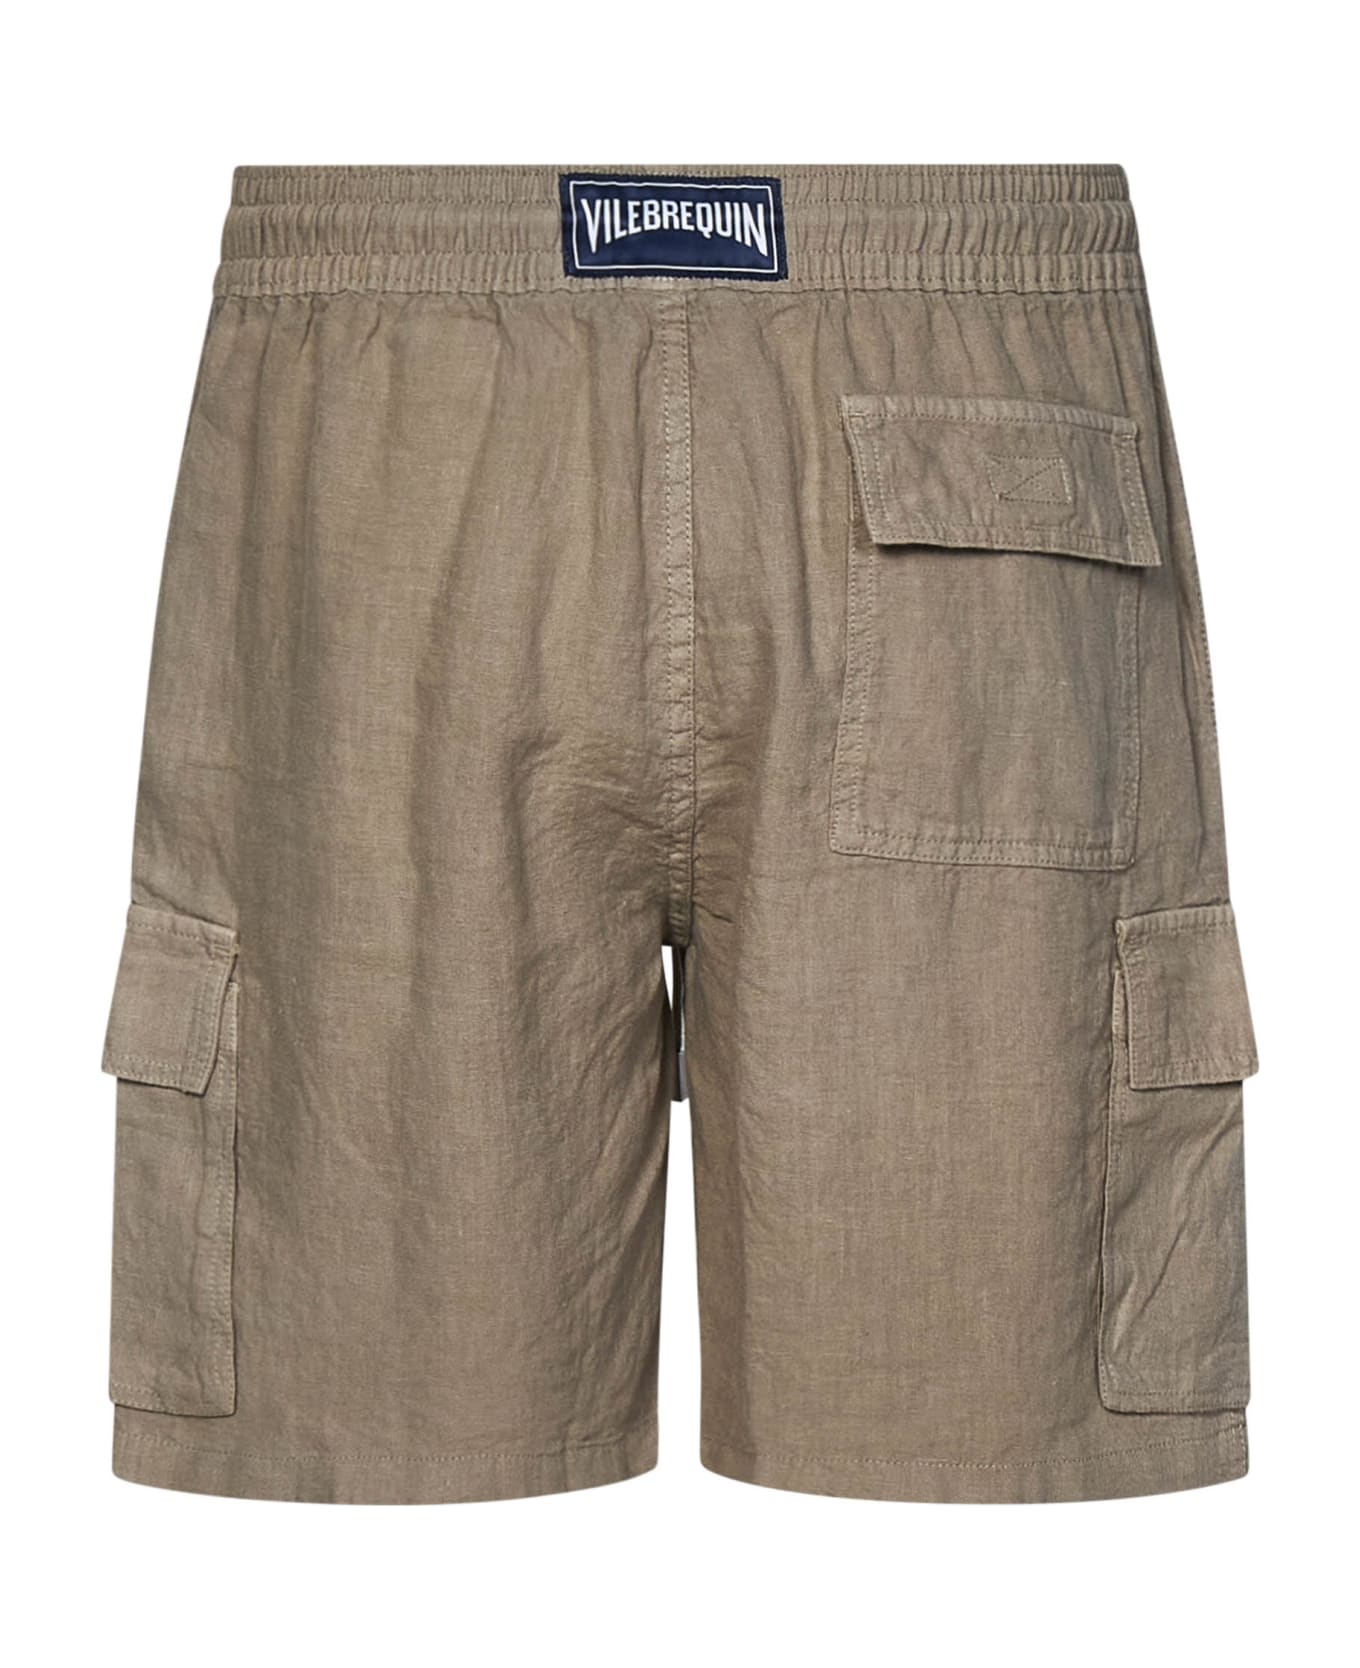 Vilebrequin Baie Shorts - Beige ショートパンツ